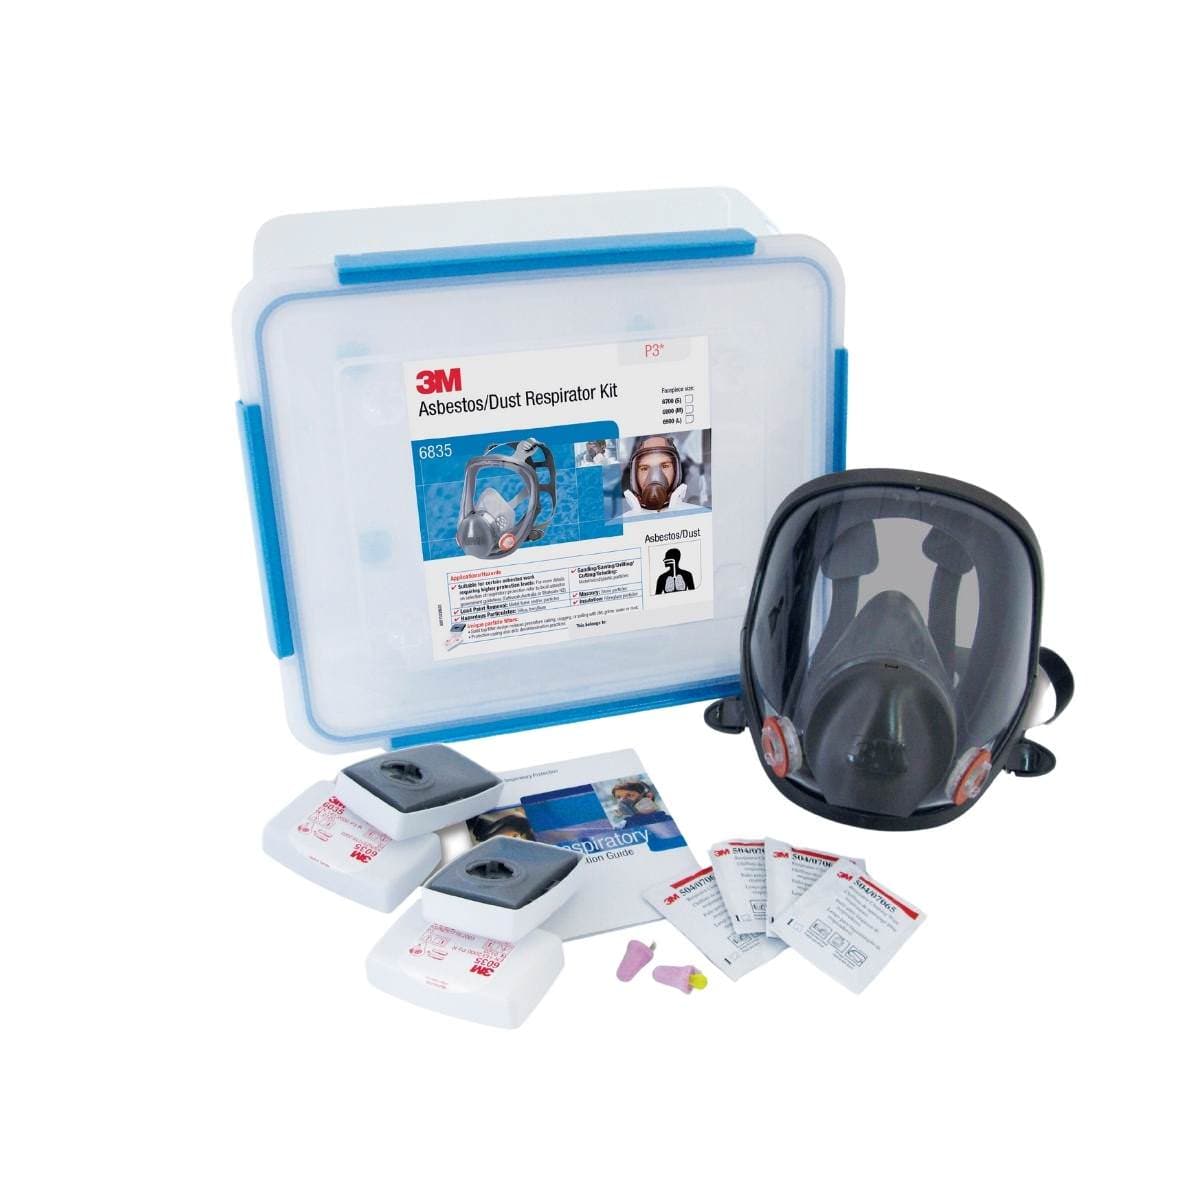 3M™ Asbestos/Dust Respirator Kit 6835 (Each)